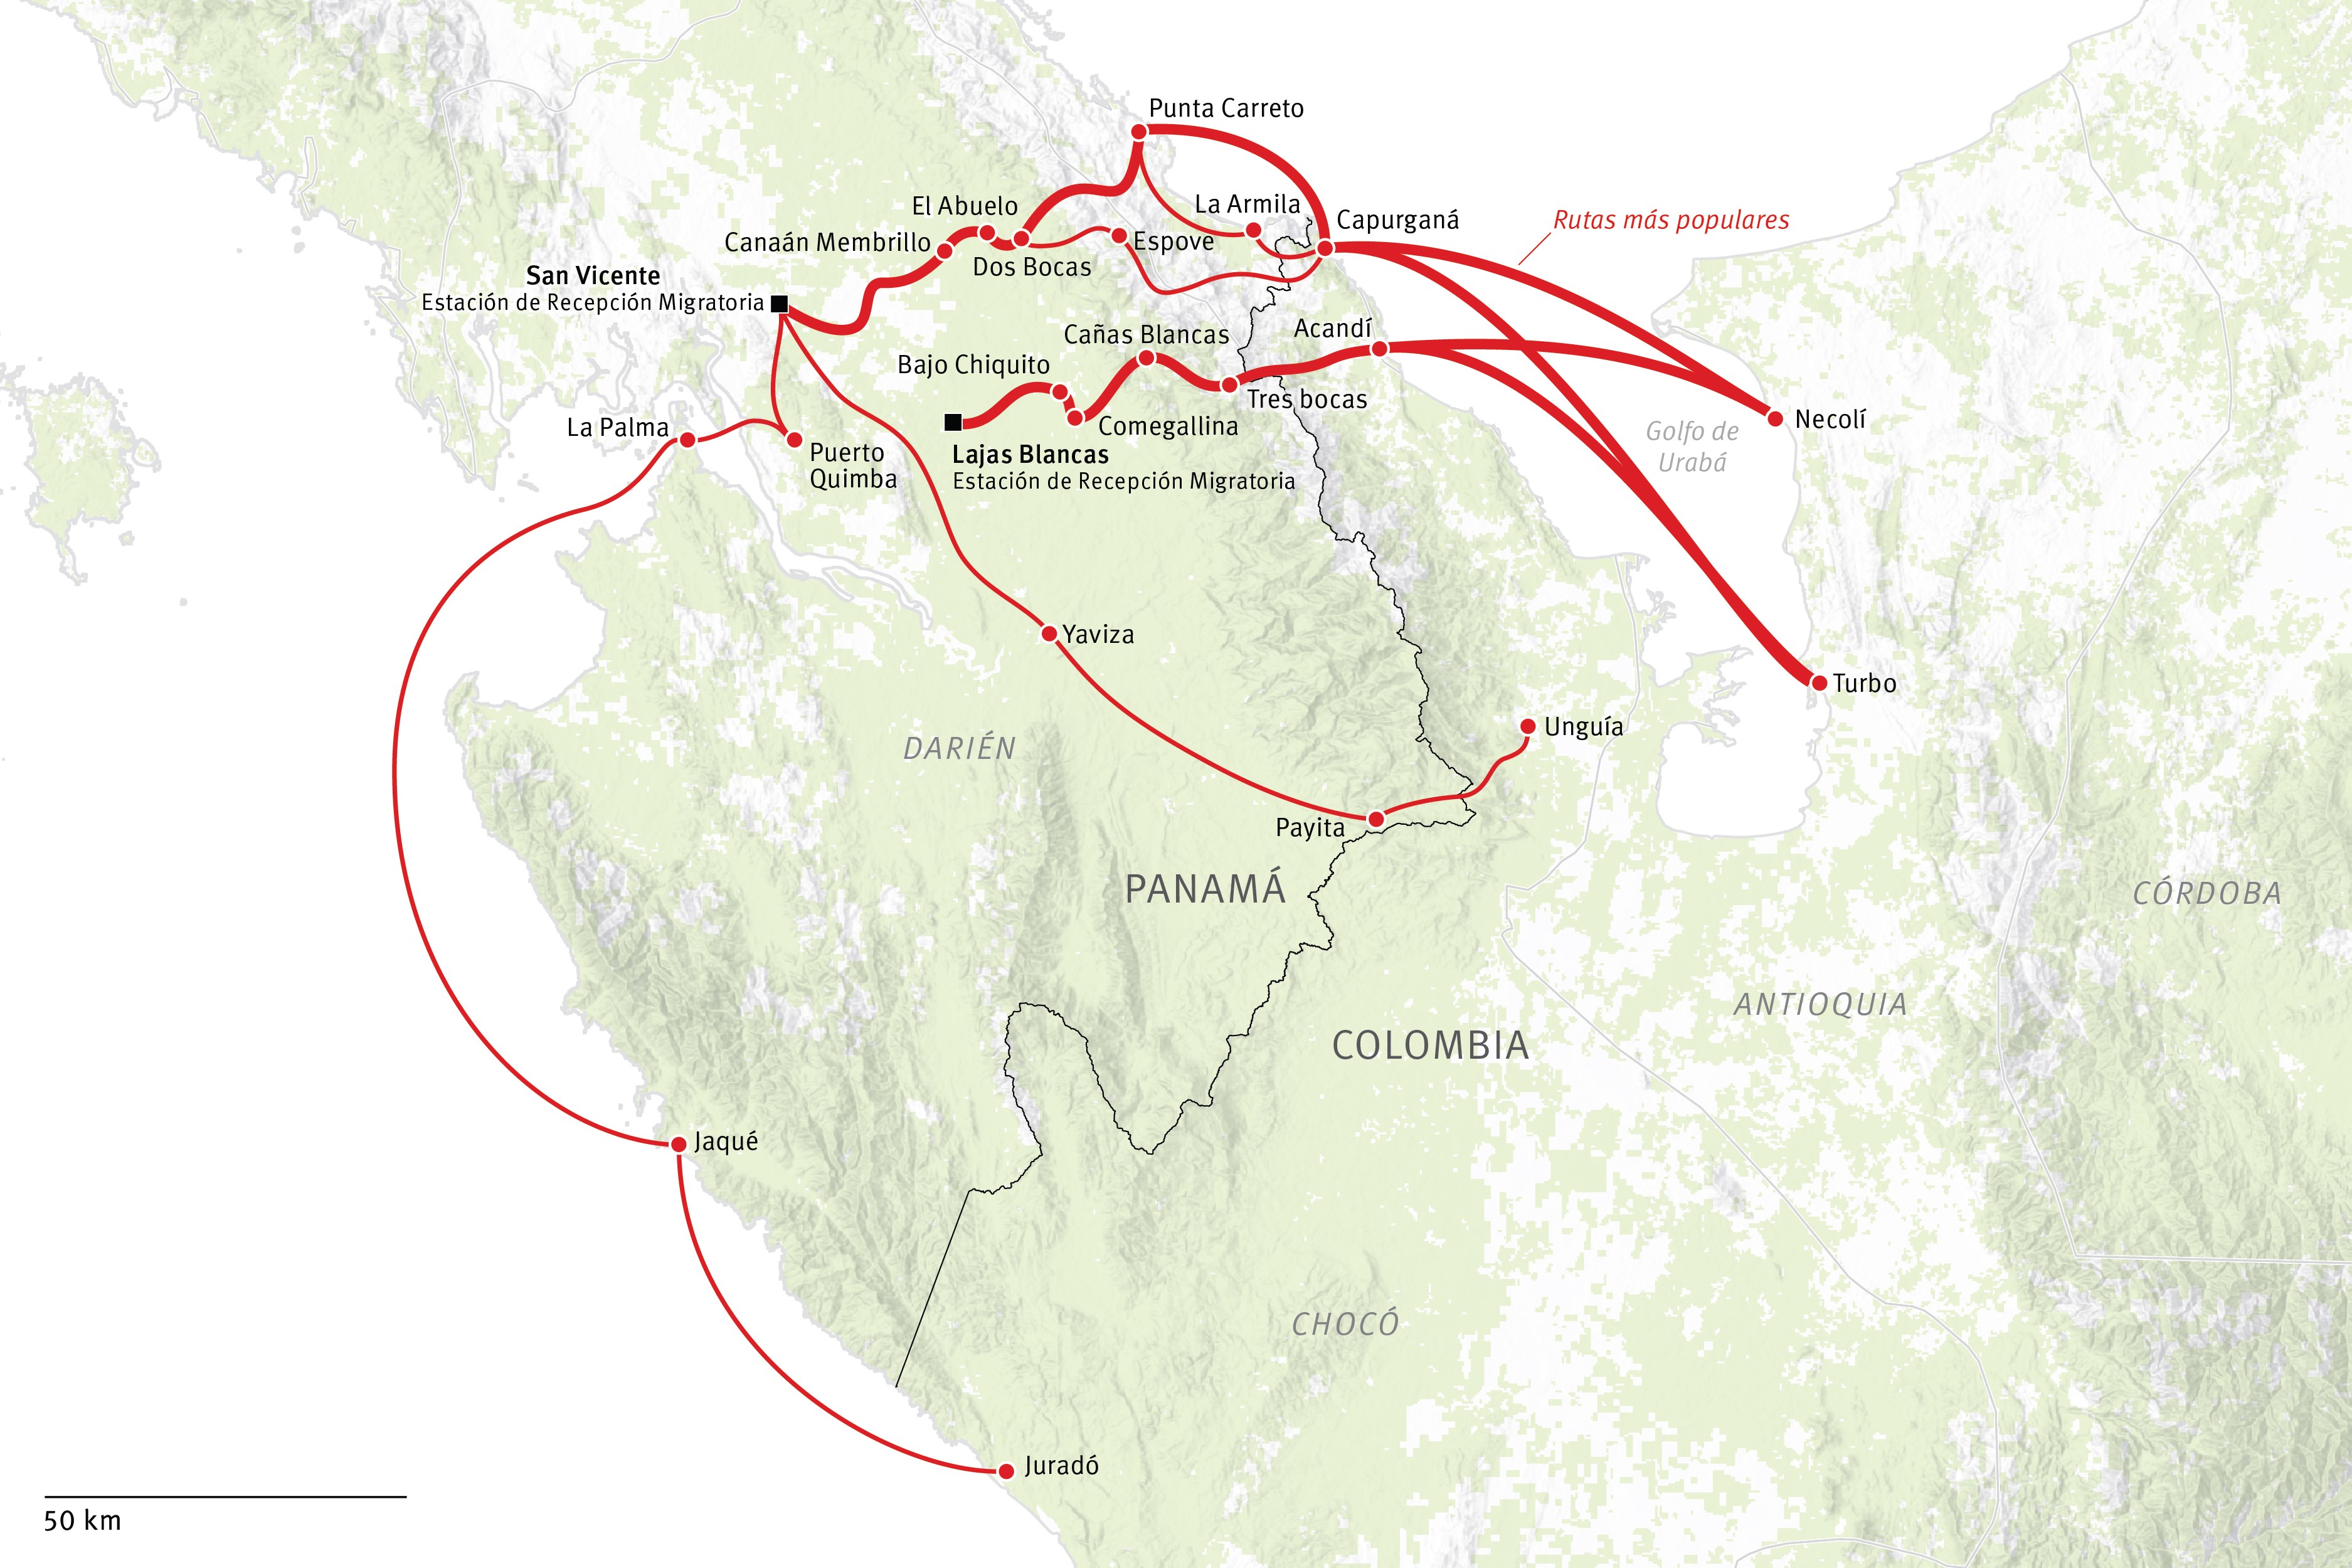 202311americas_colombia_panama_dariengap_routes_map_sp